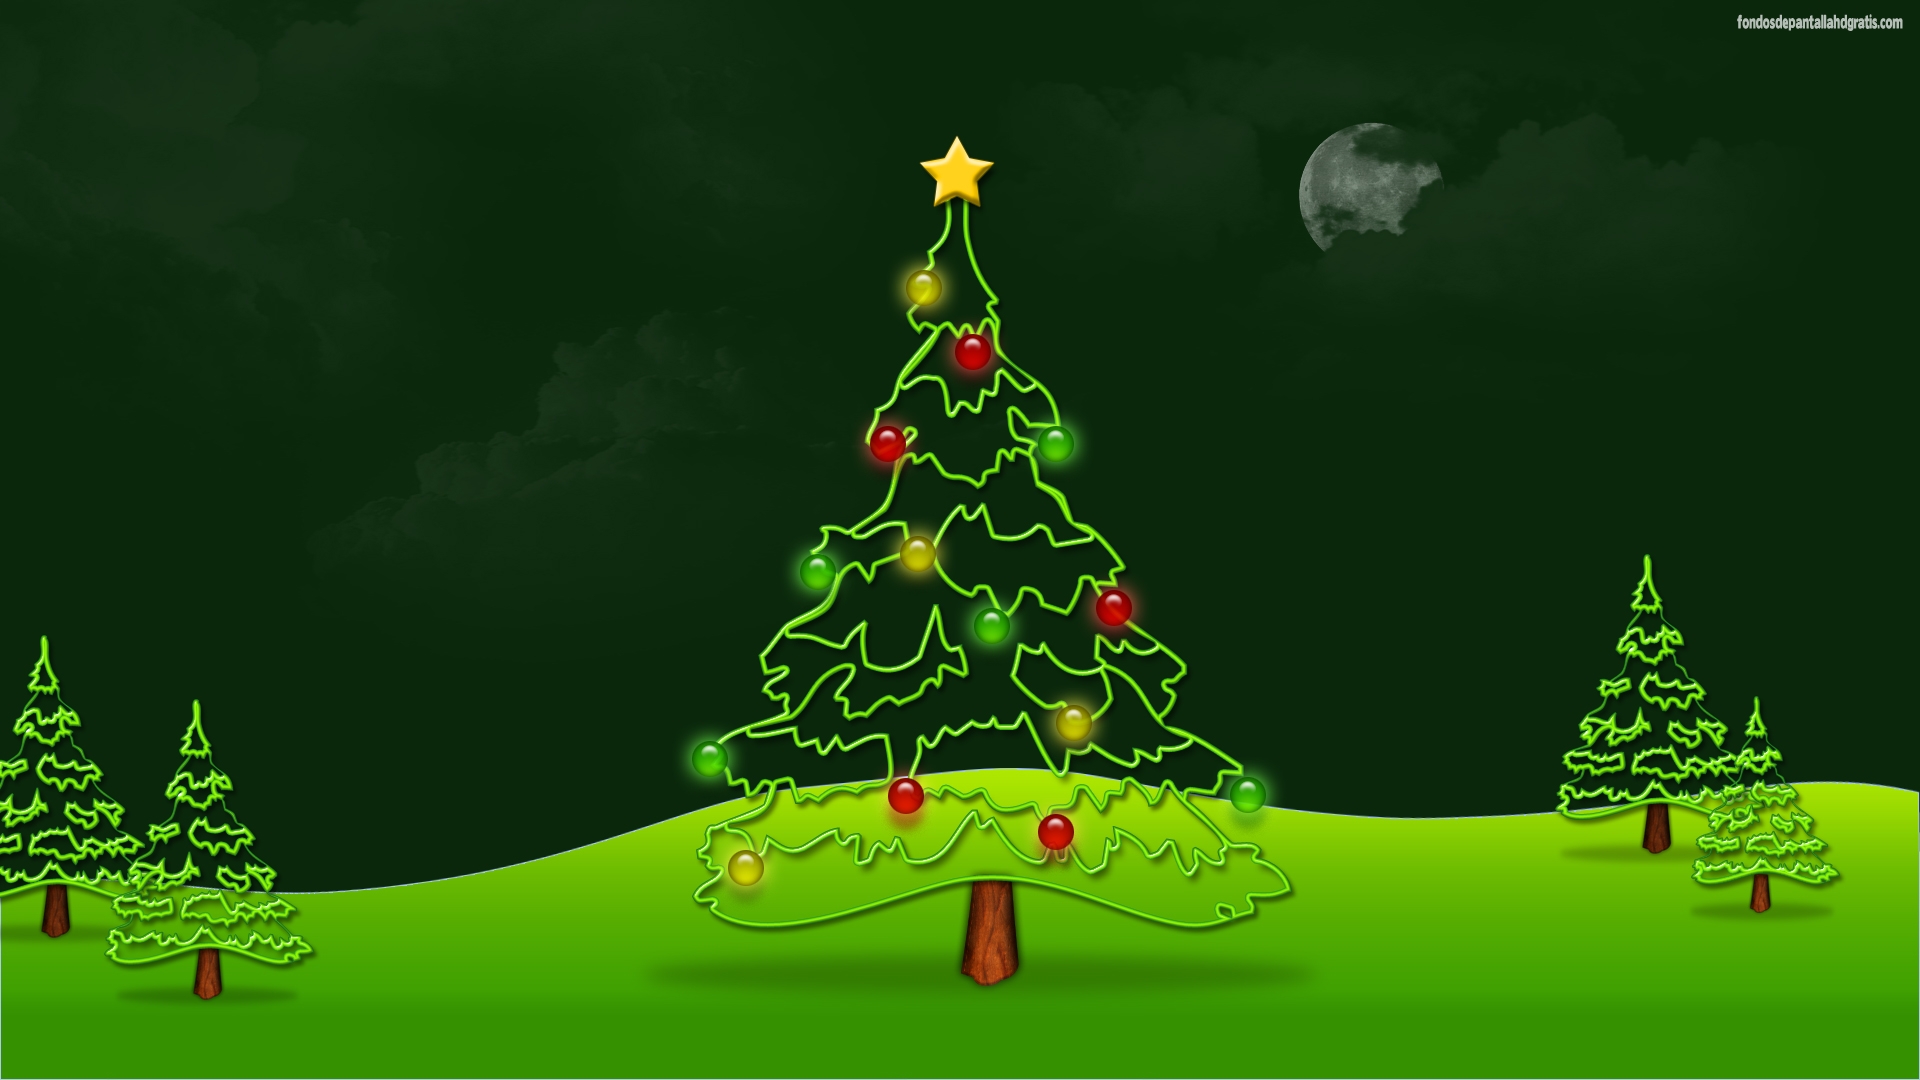 Free download Descargar imagen animated christmas tree wallpaper hd hd